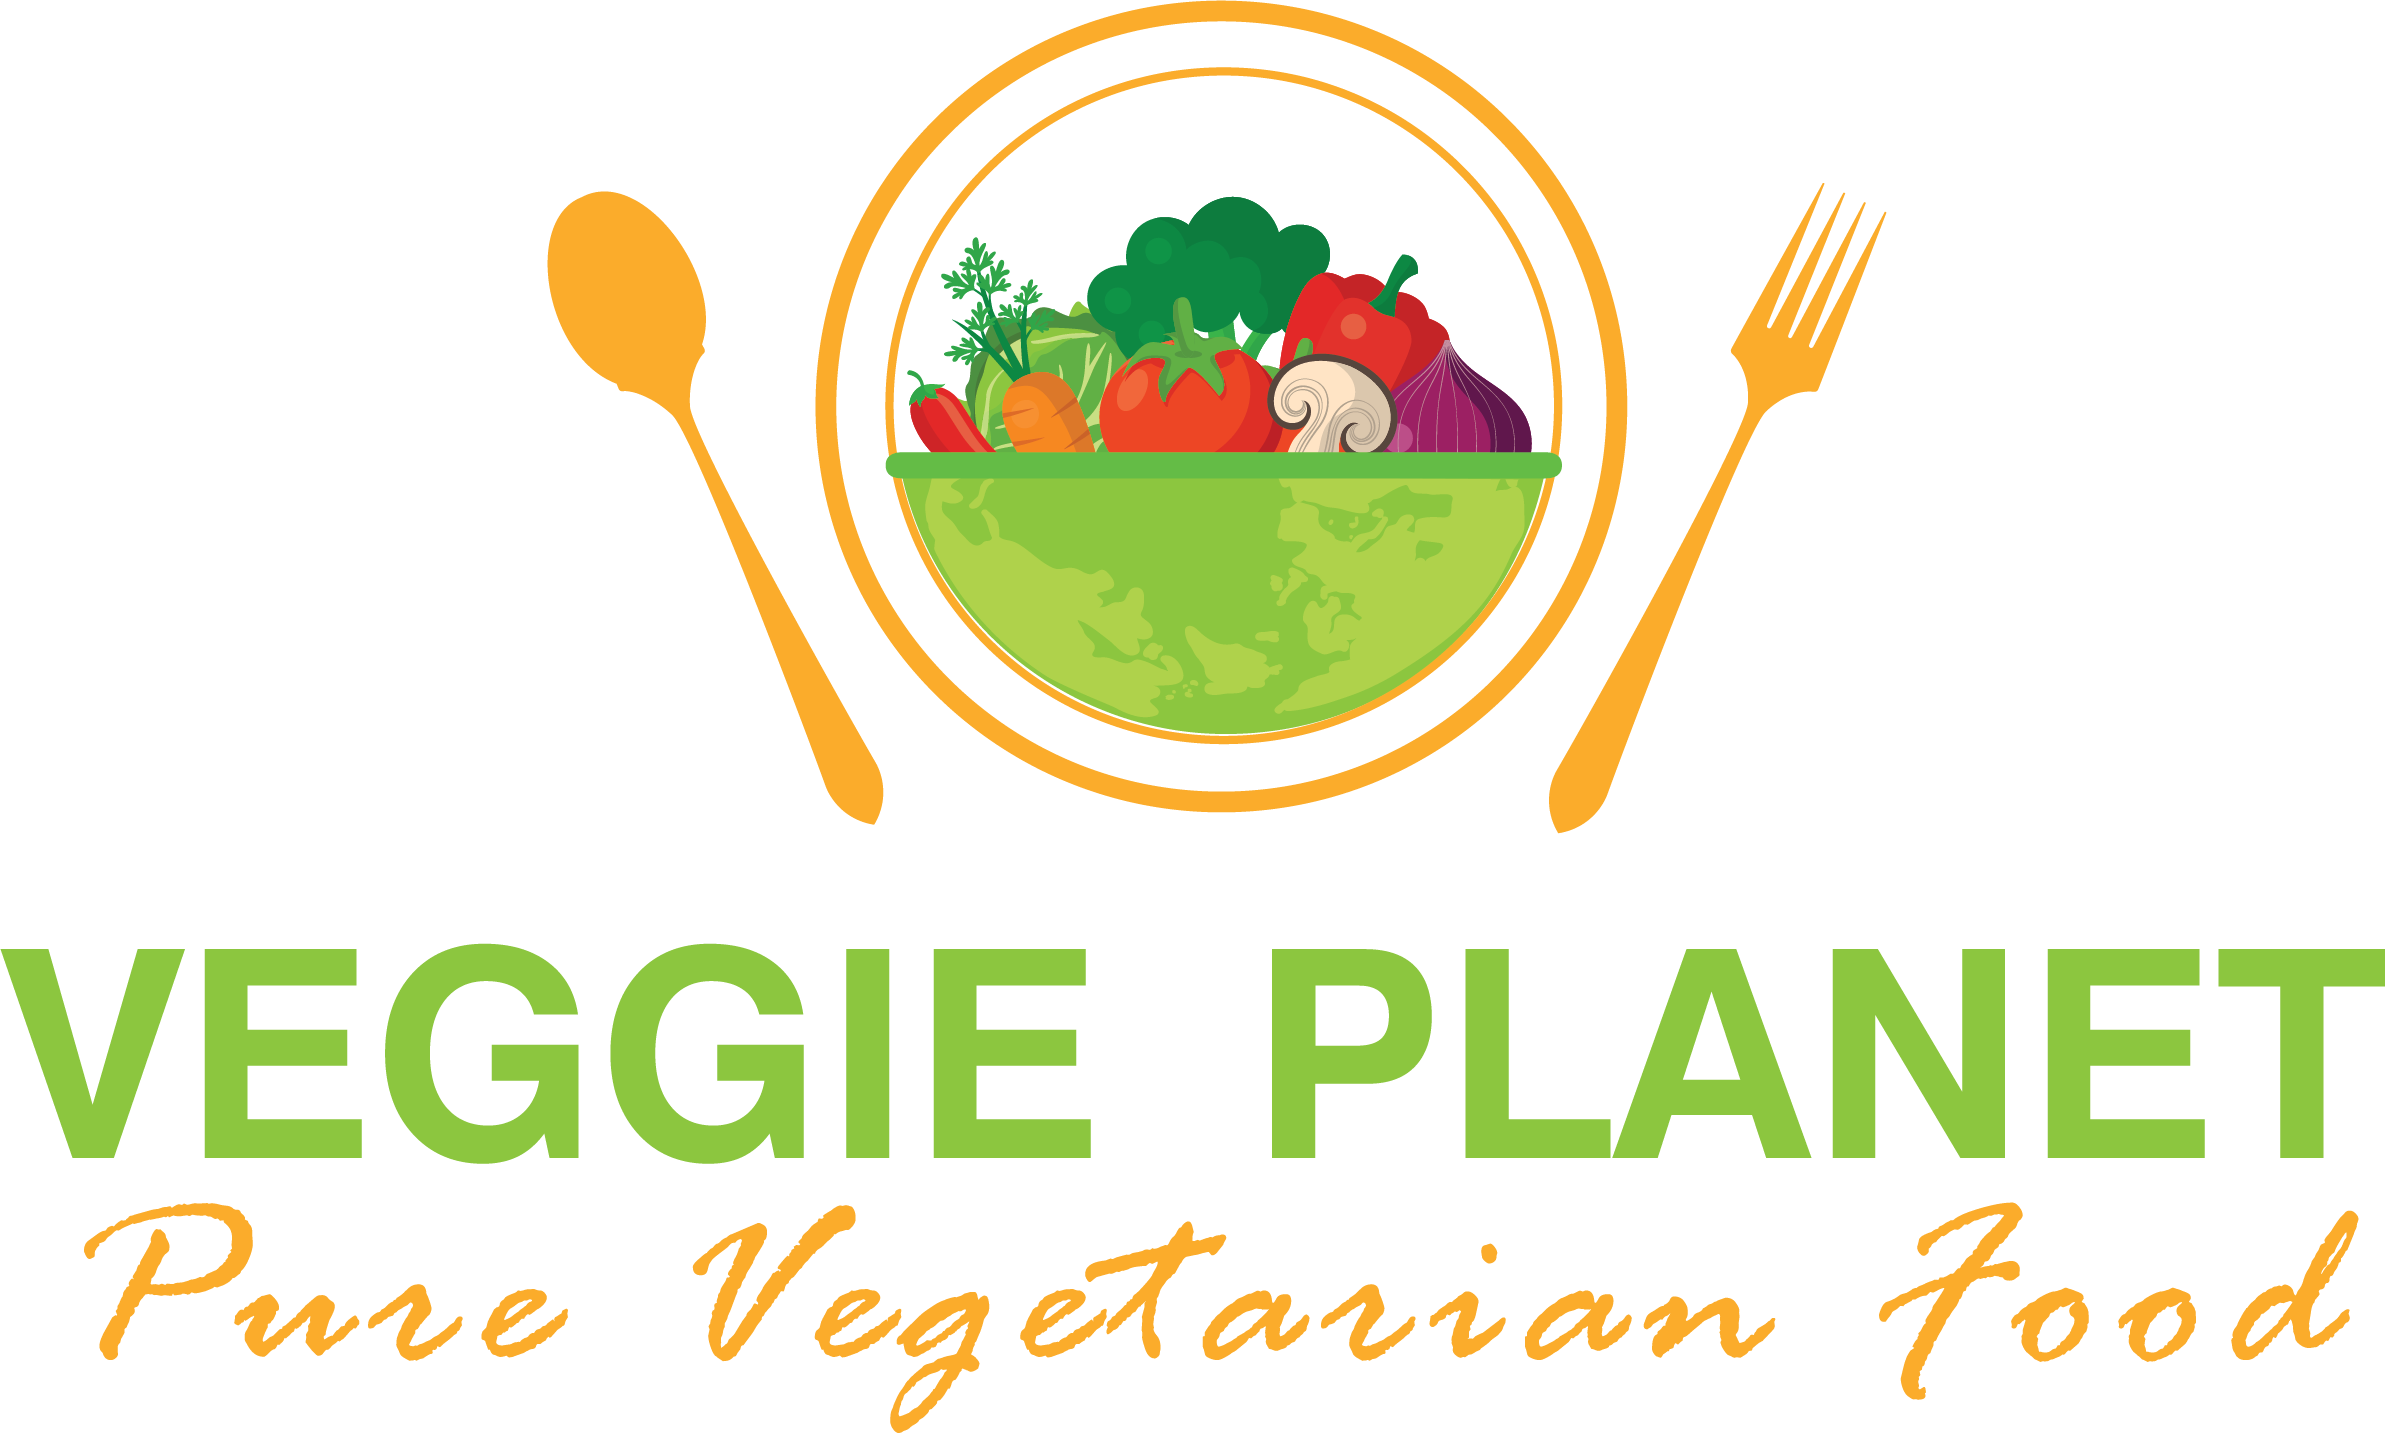 Oh My Veg: Vegan and Vegetarian Recipes